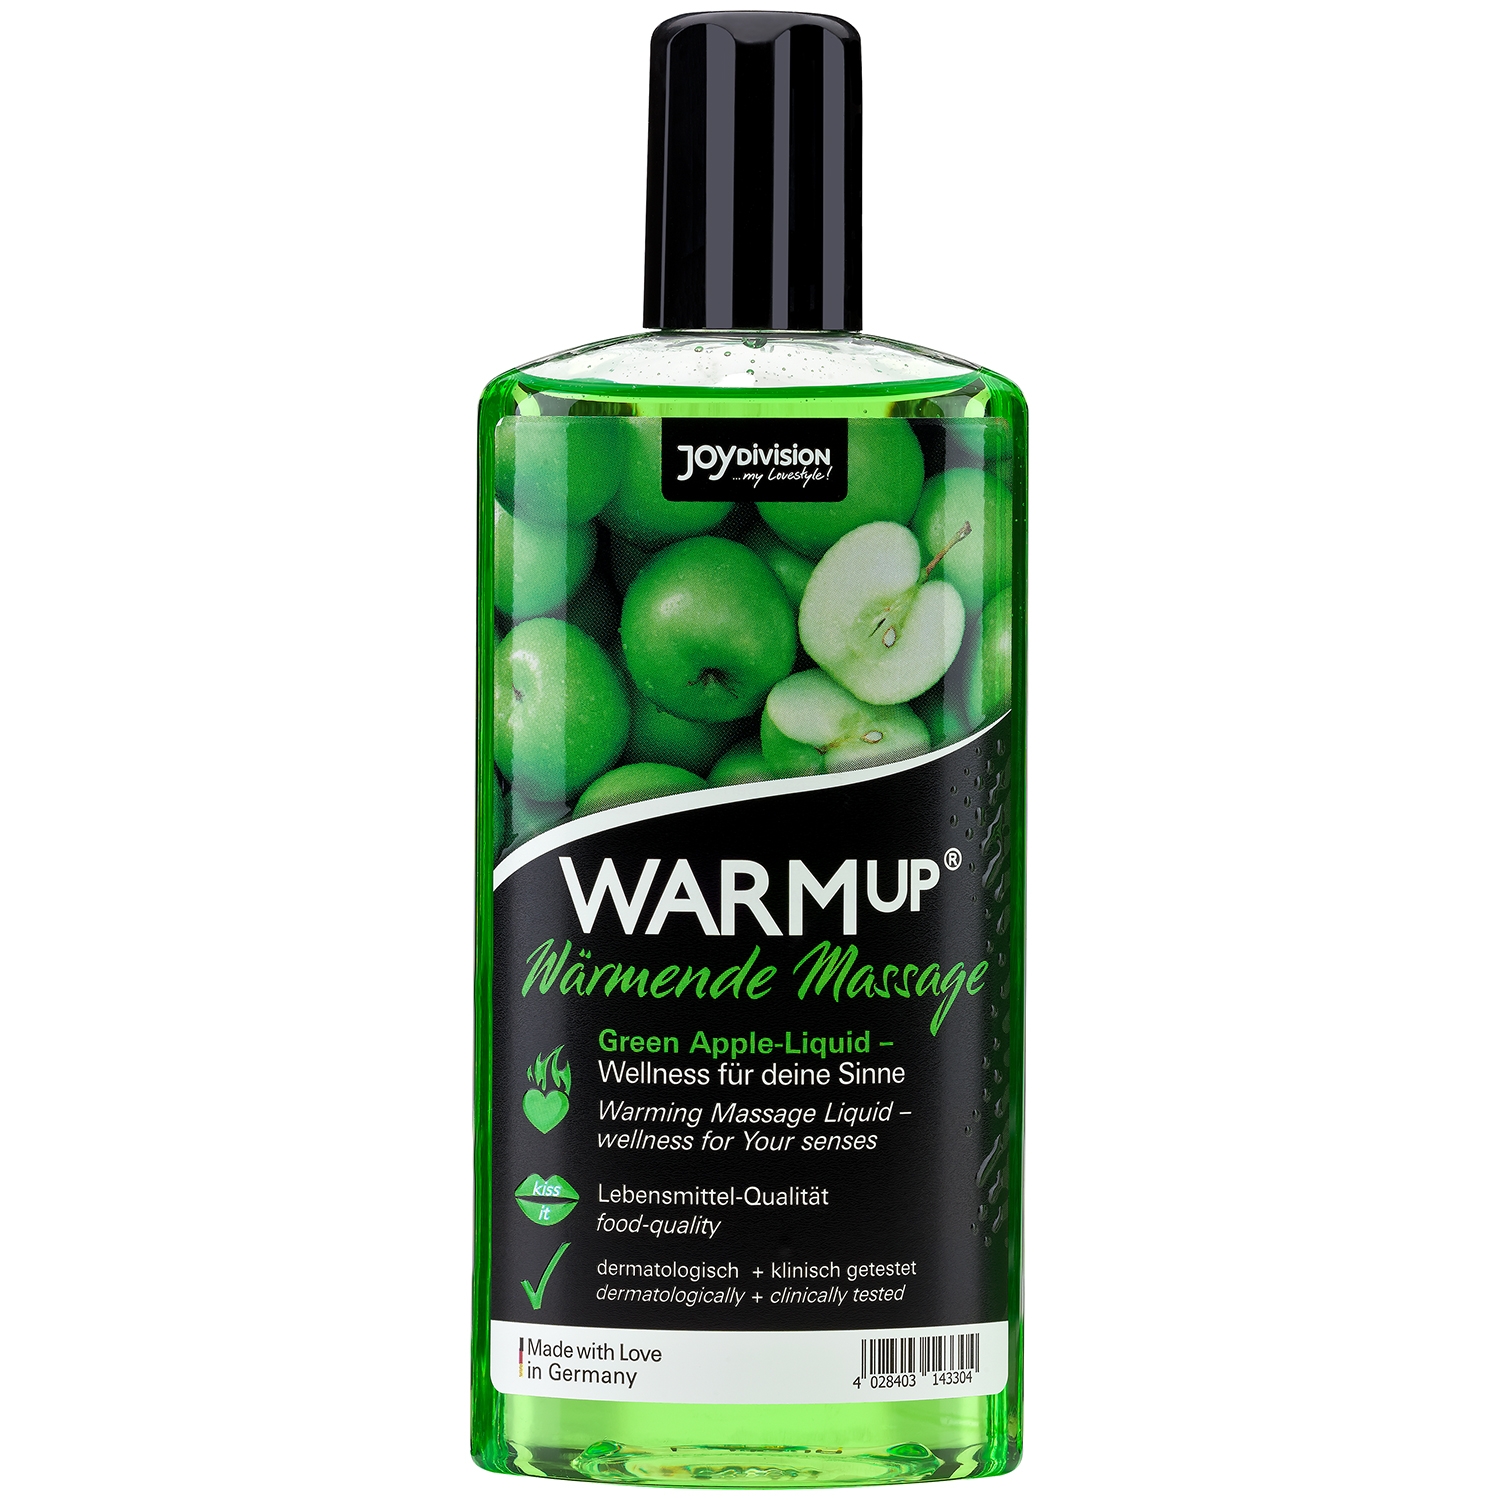 Joydivision WARMup Varmende Massageolie med Smag 150 ml - Green